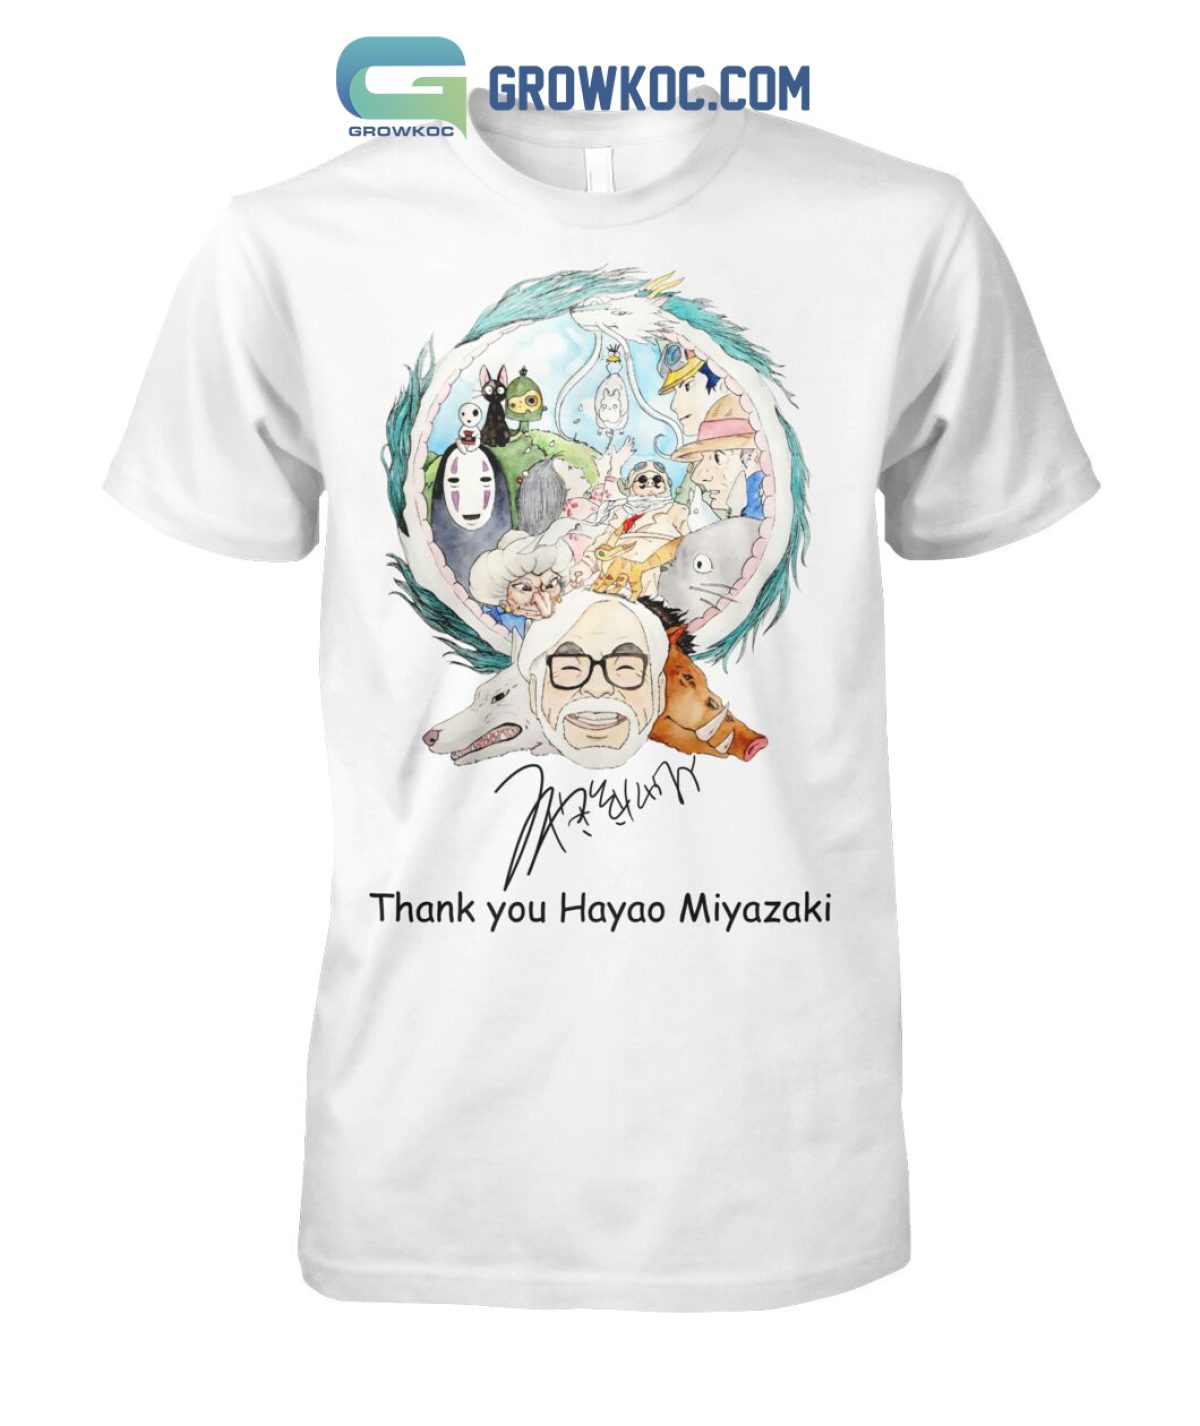 We've got more Ghibli goodies up our sleeve! Hayao Miyazaki's